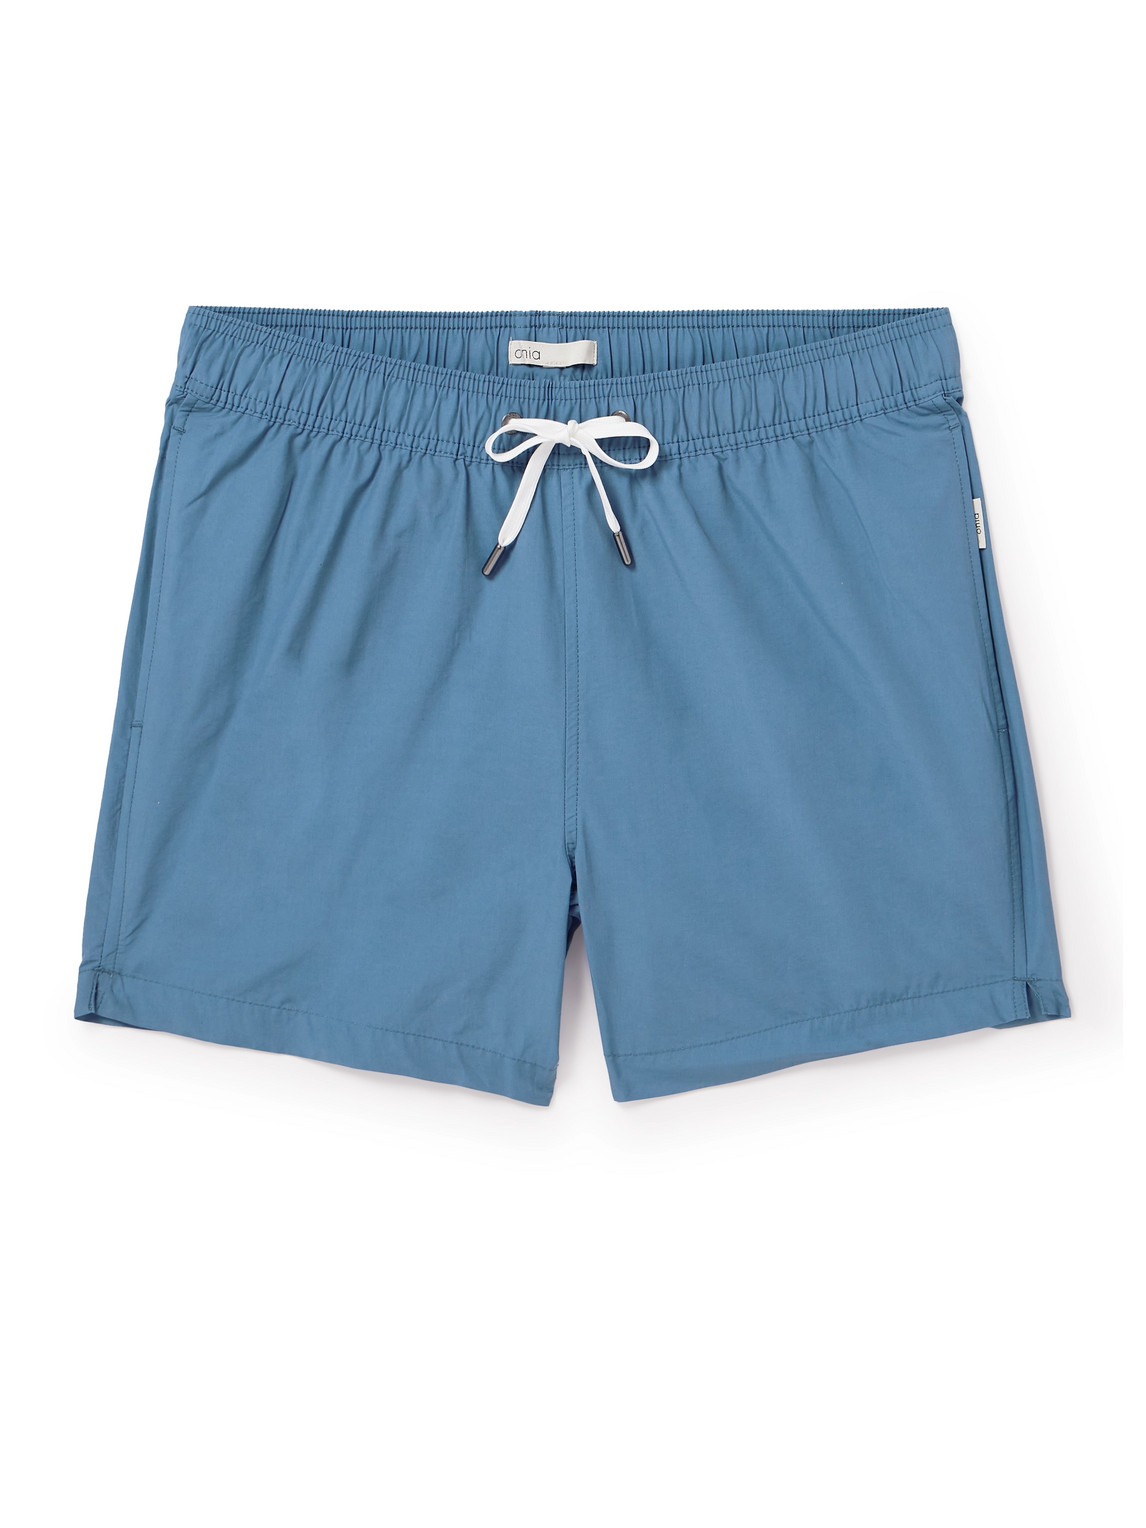 Onia - Charles Straight-Leg Mid-Length Swim Shorts - Men - Blue - L von Onia